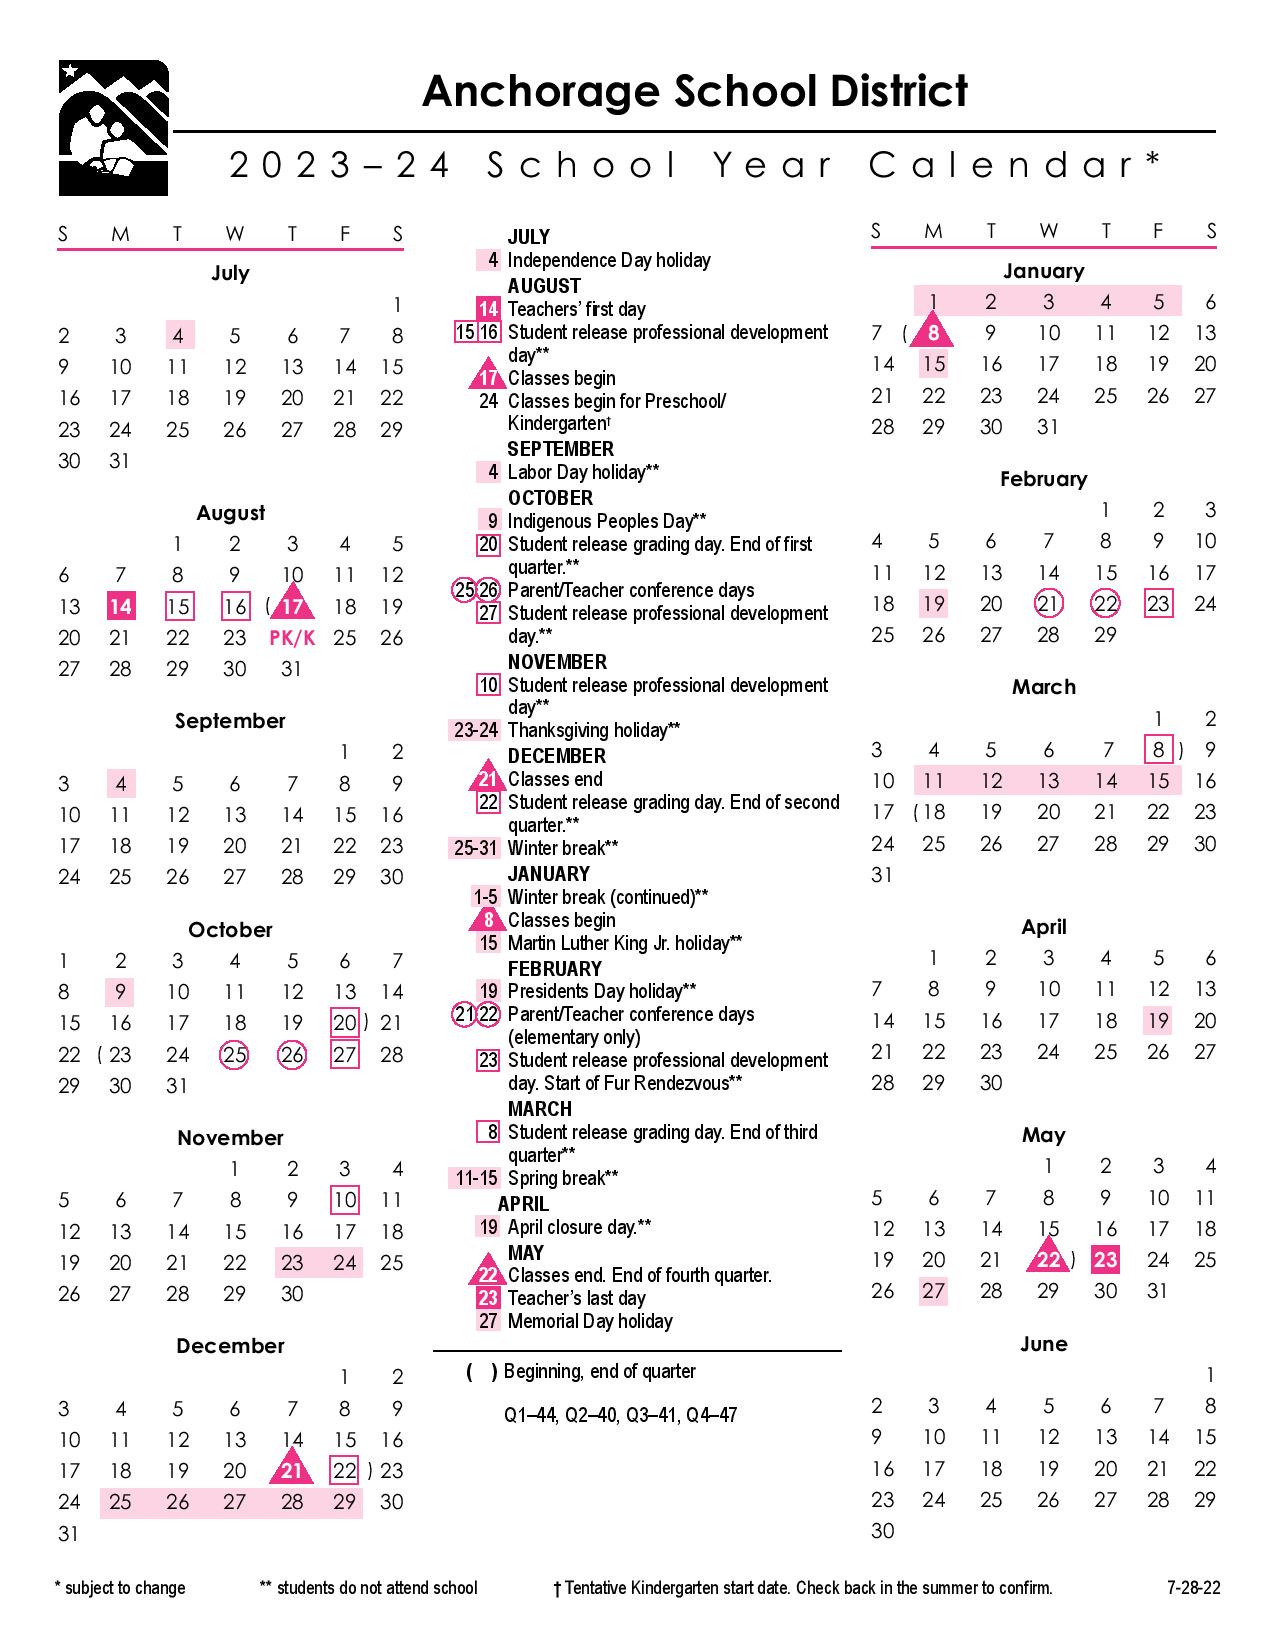 Anchorage School District Calendar 20222023